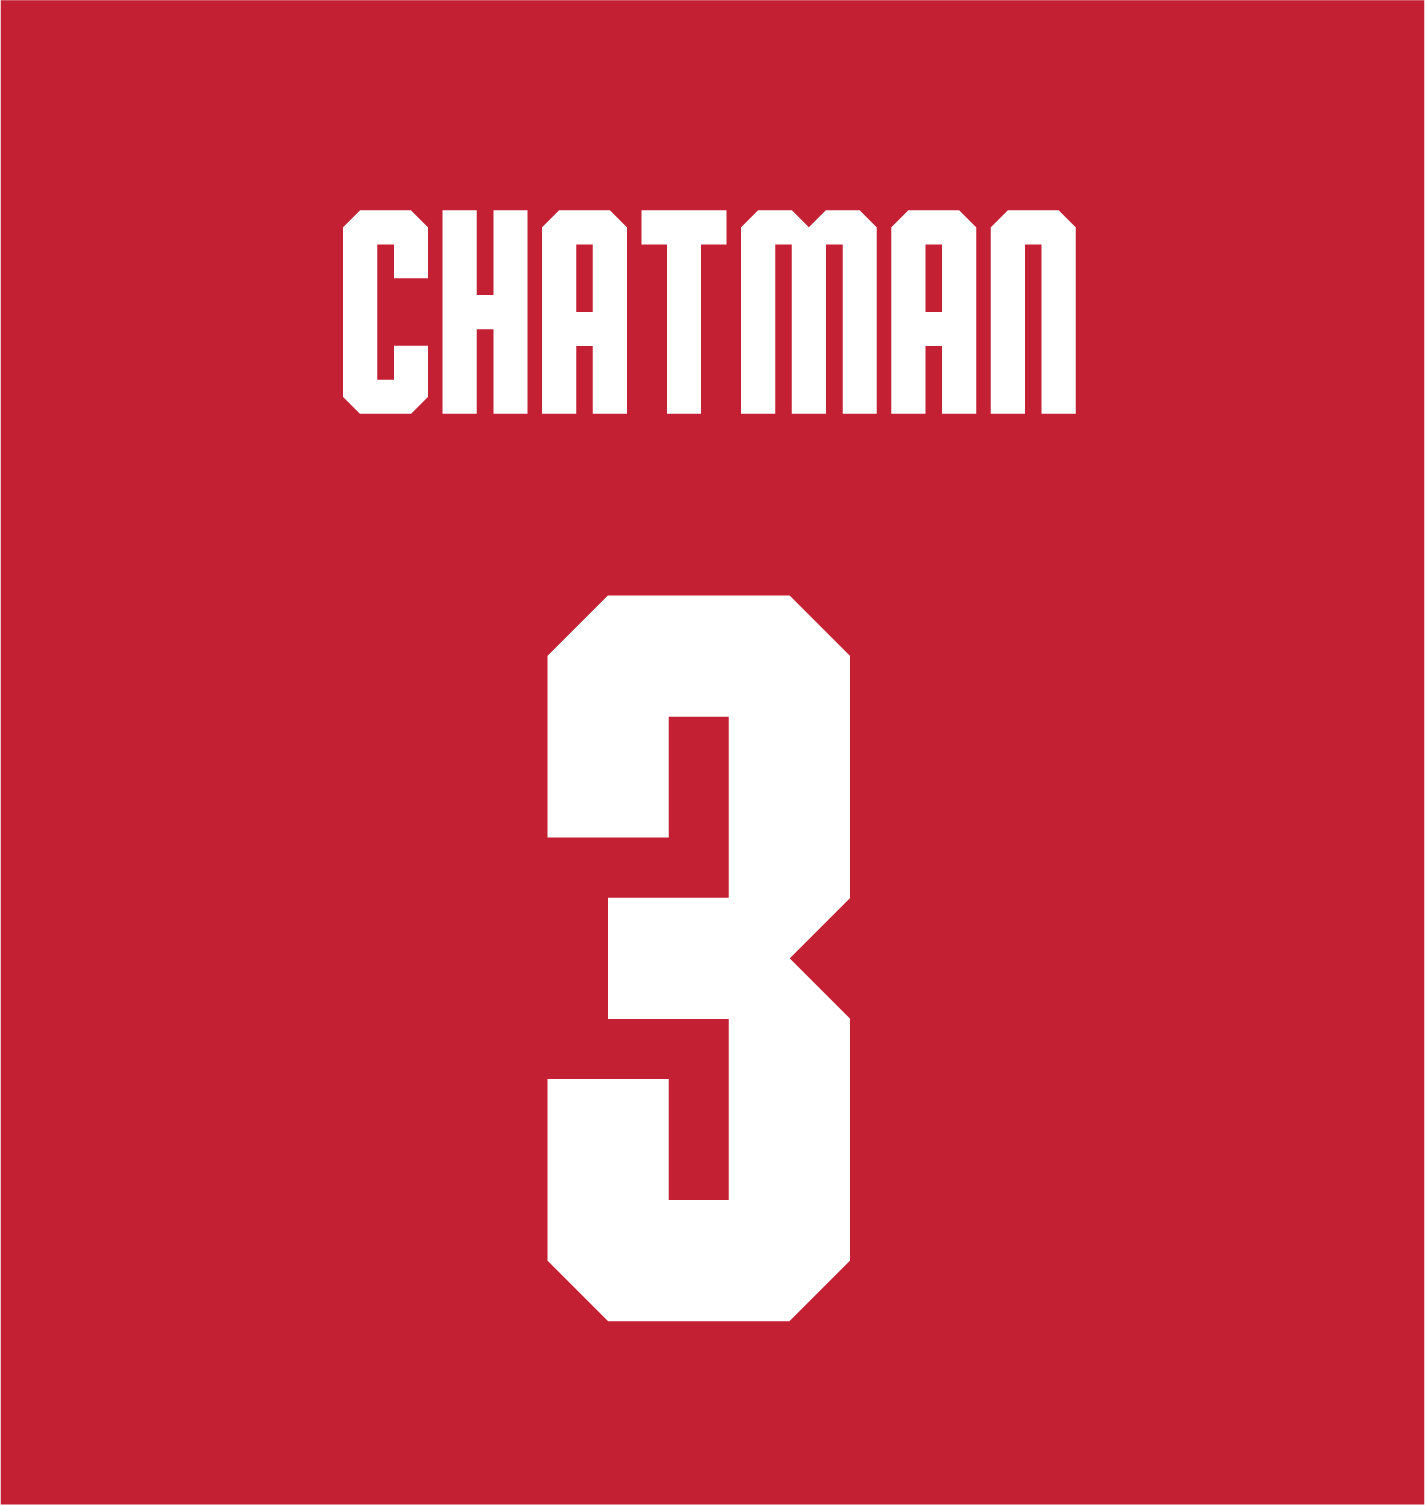 Taison Chatman | #3